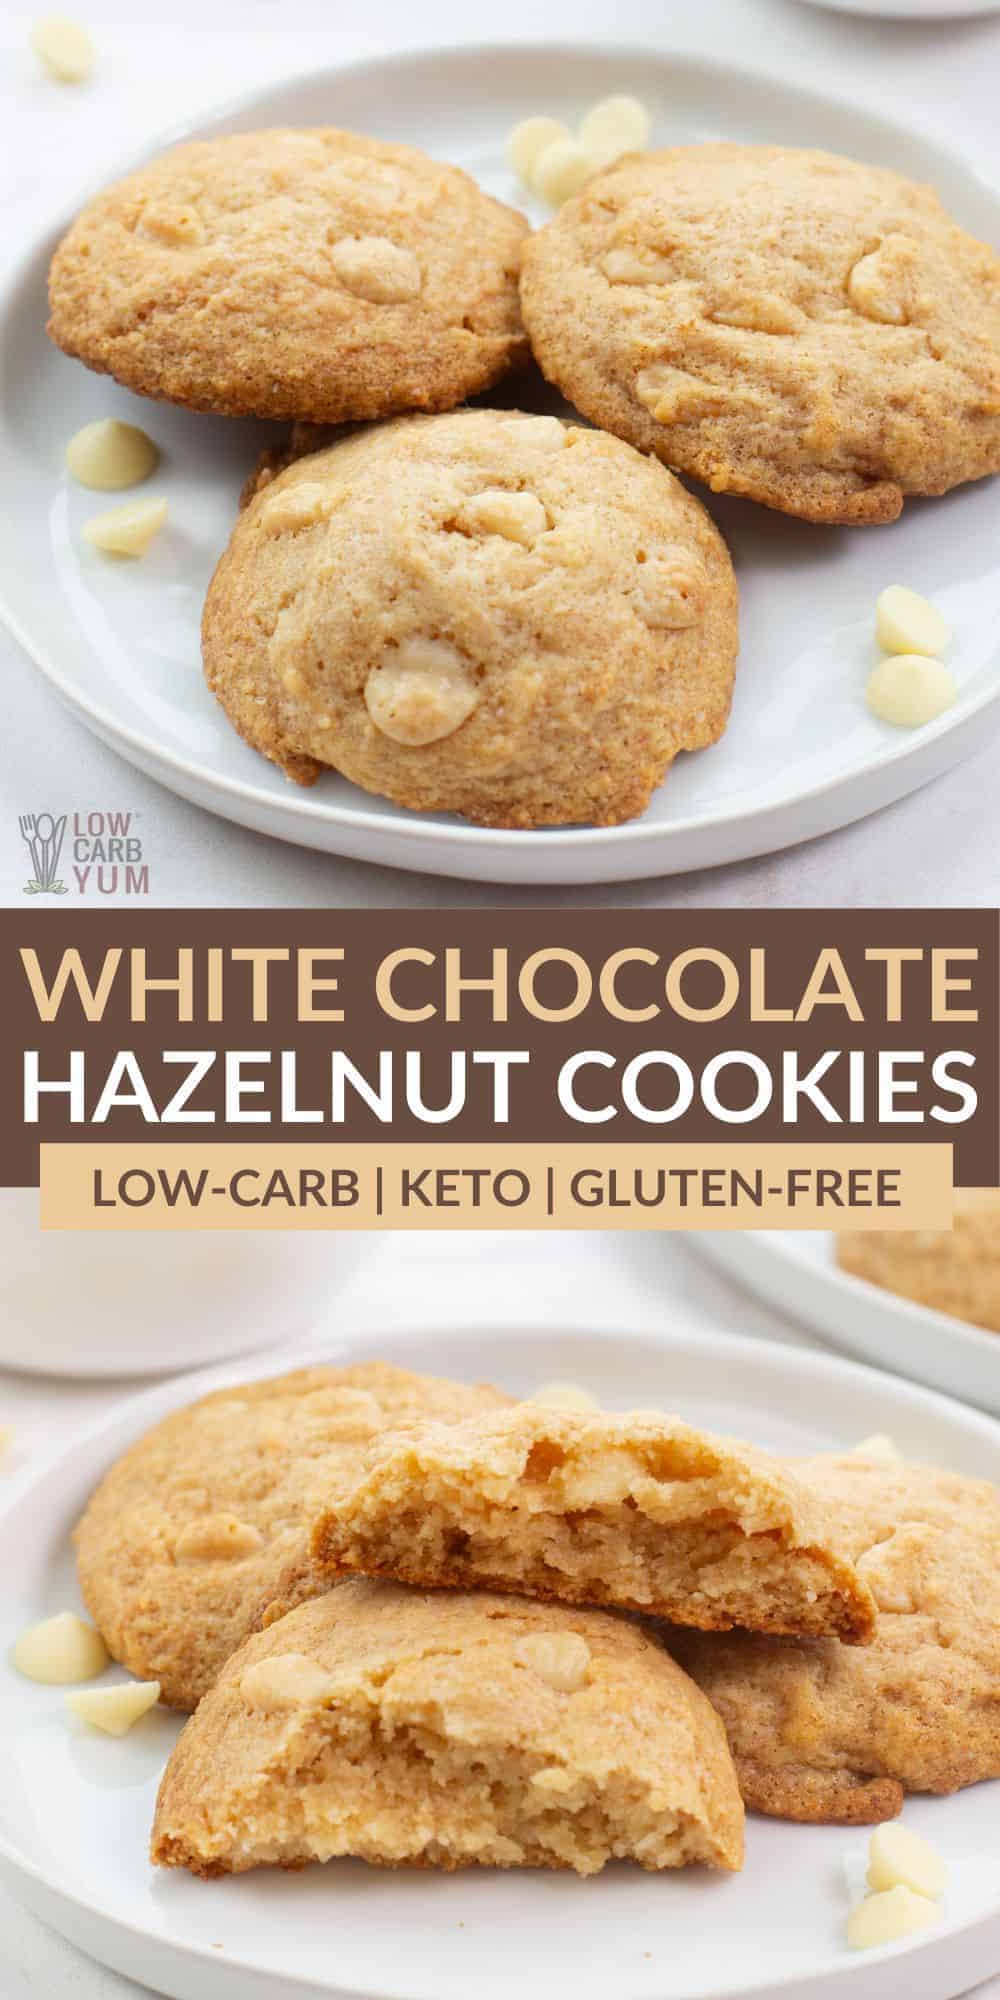 white chocolate hazelnut cookies pinterest image.